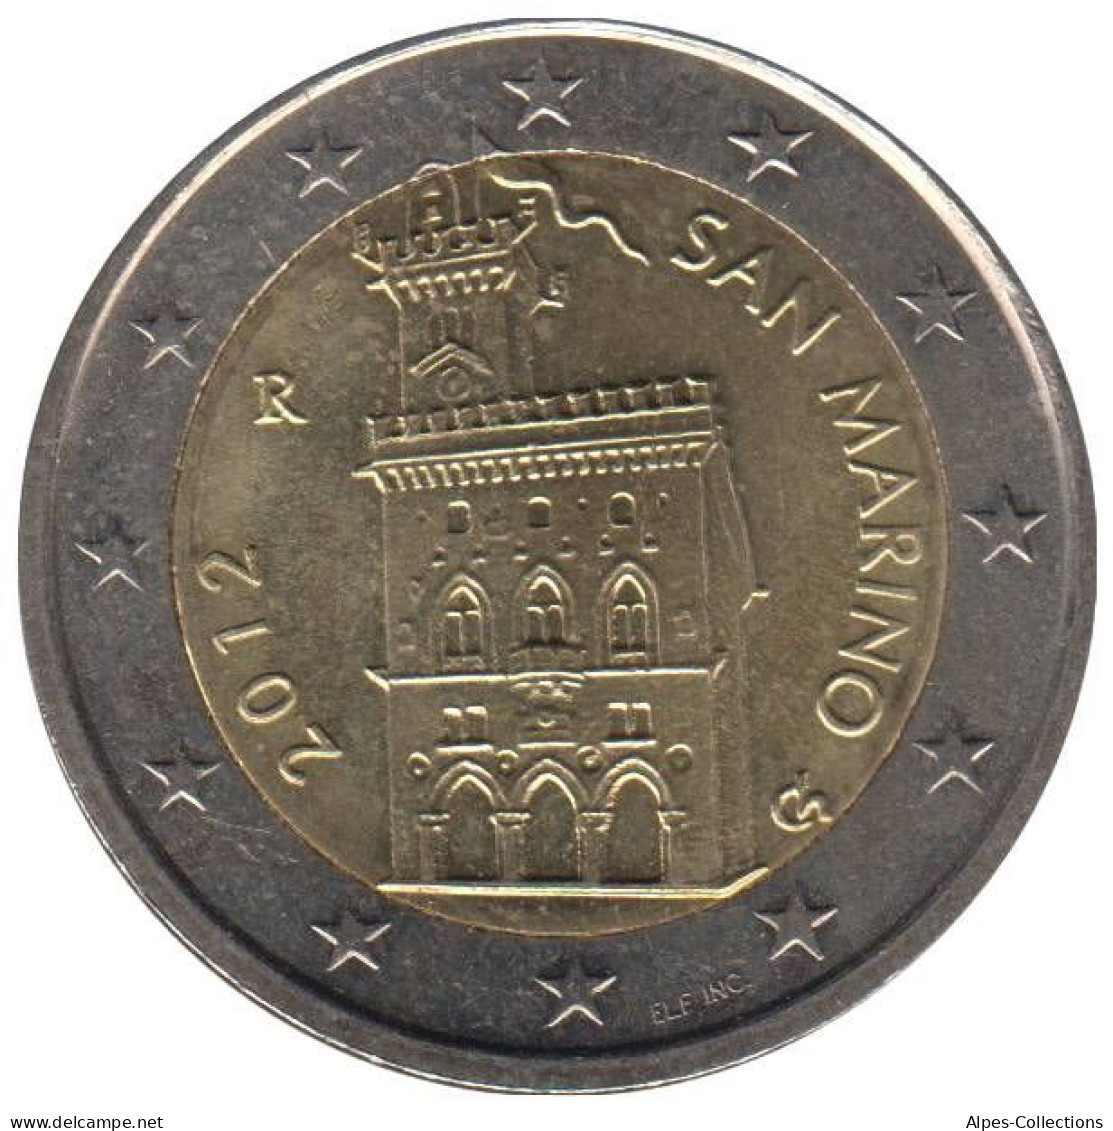 SA20012.4 - SAINT MARIN - 2 Euros - 2012 - San Marino